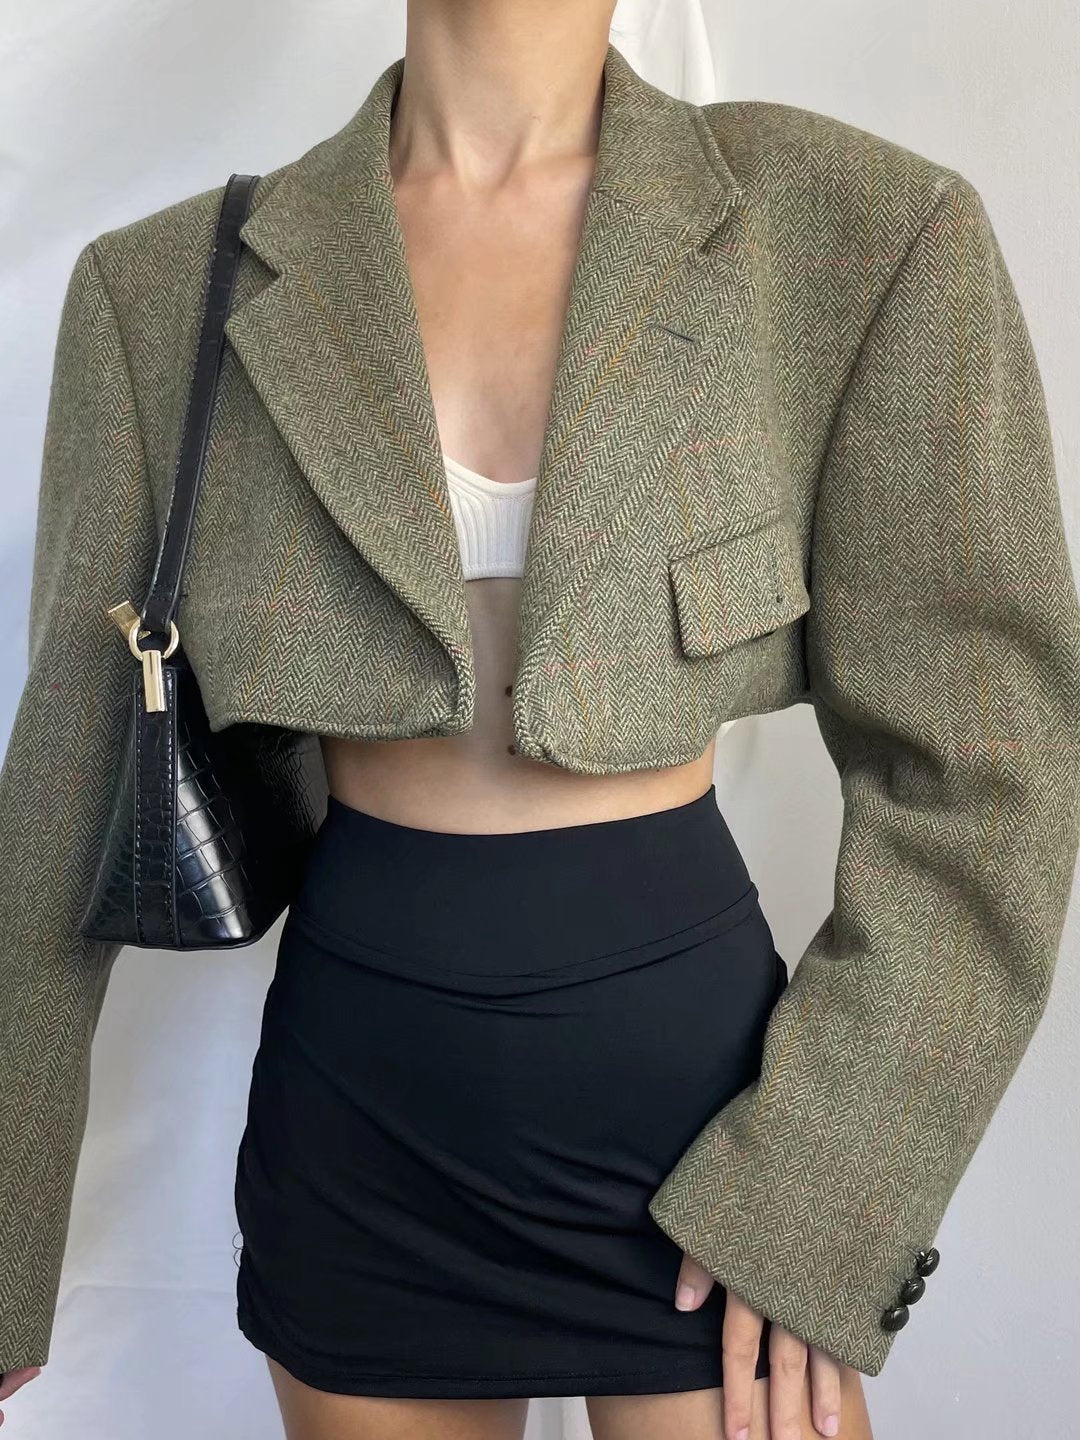 OOTDGIRL Women's Early Autumn New Fashion Retro All-Match Slim Waist One-Button Short Color Matching Blazer